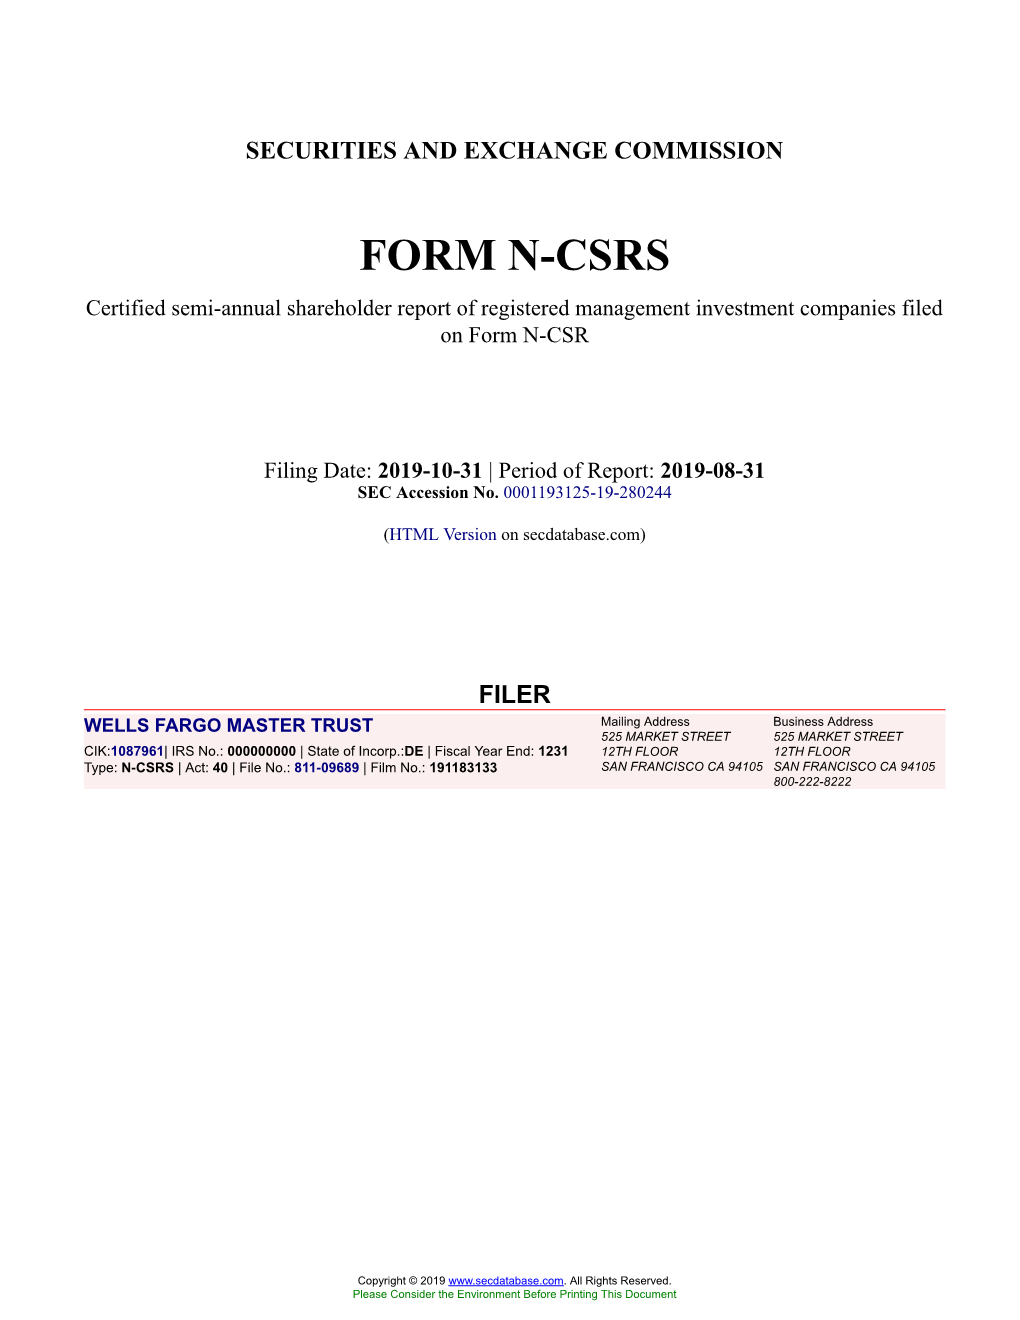 WELLS FARGO MASTER TRUST Form N-CSRS Filed 2019-10-31